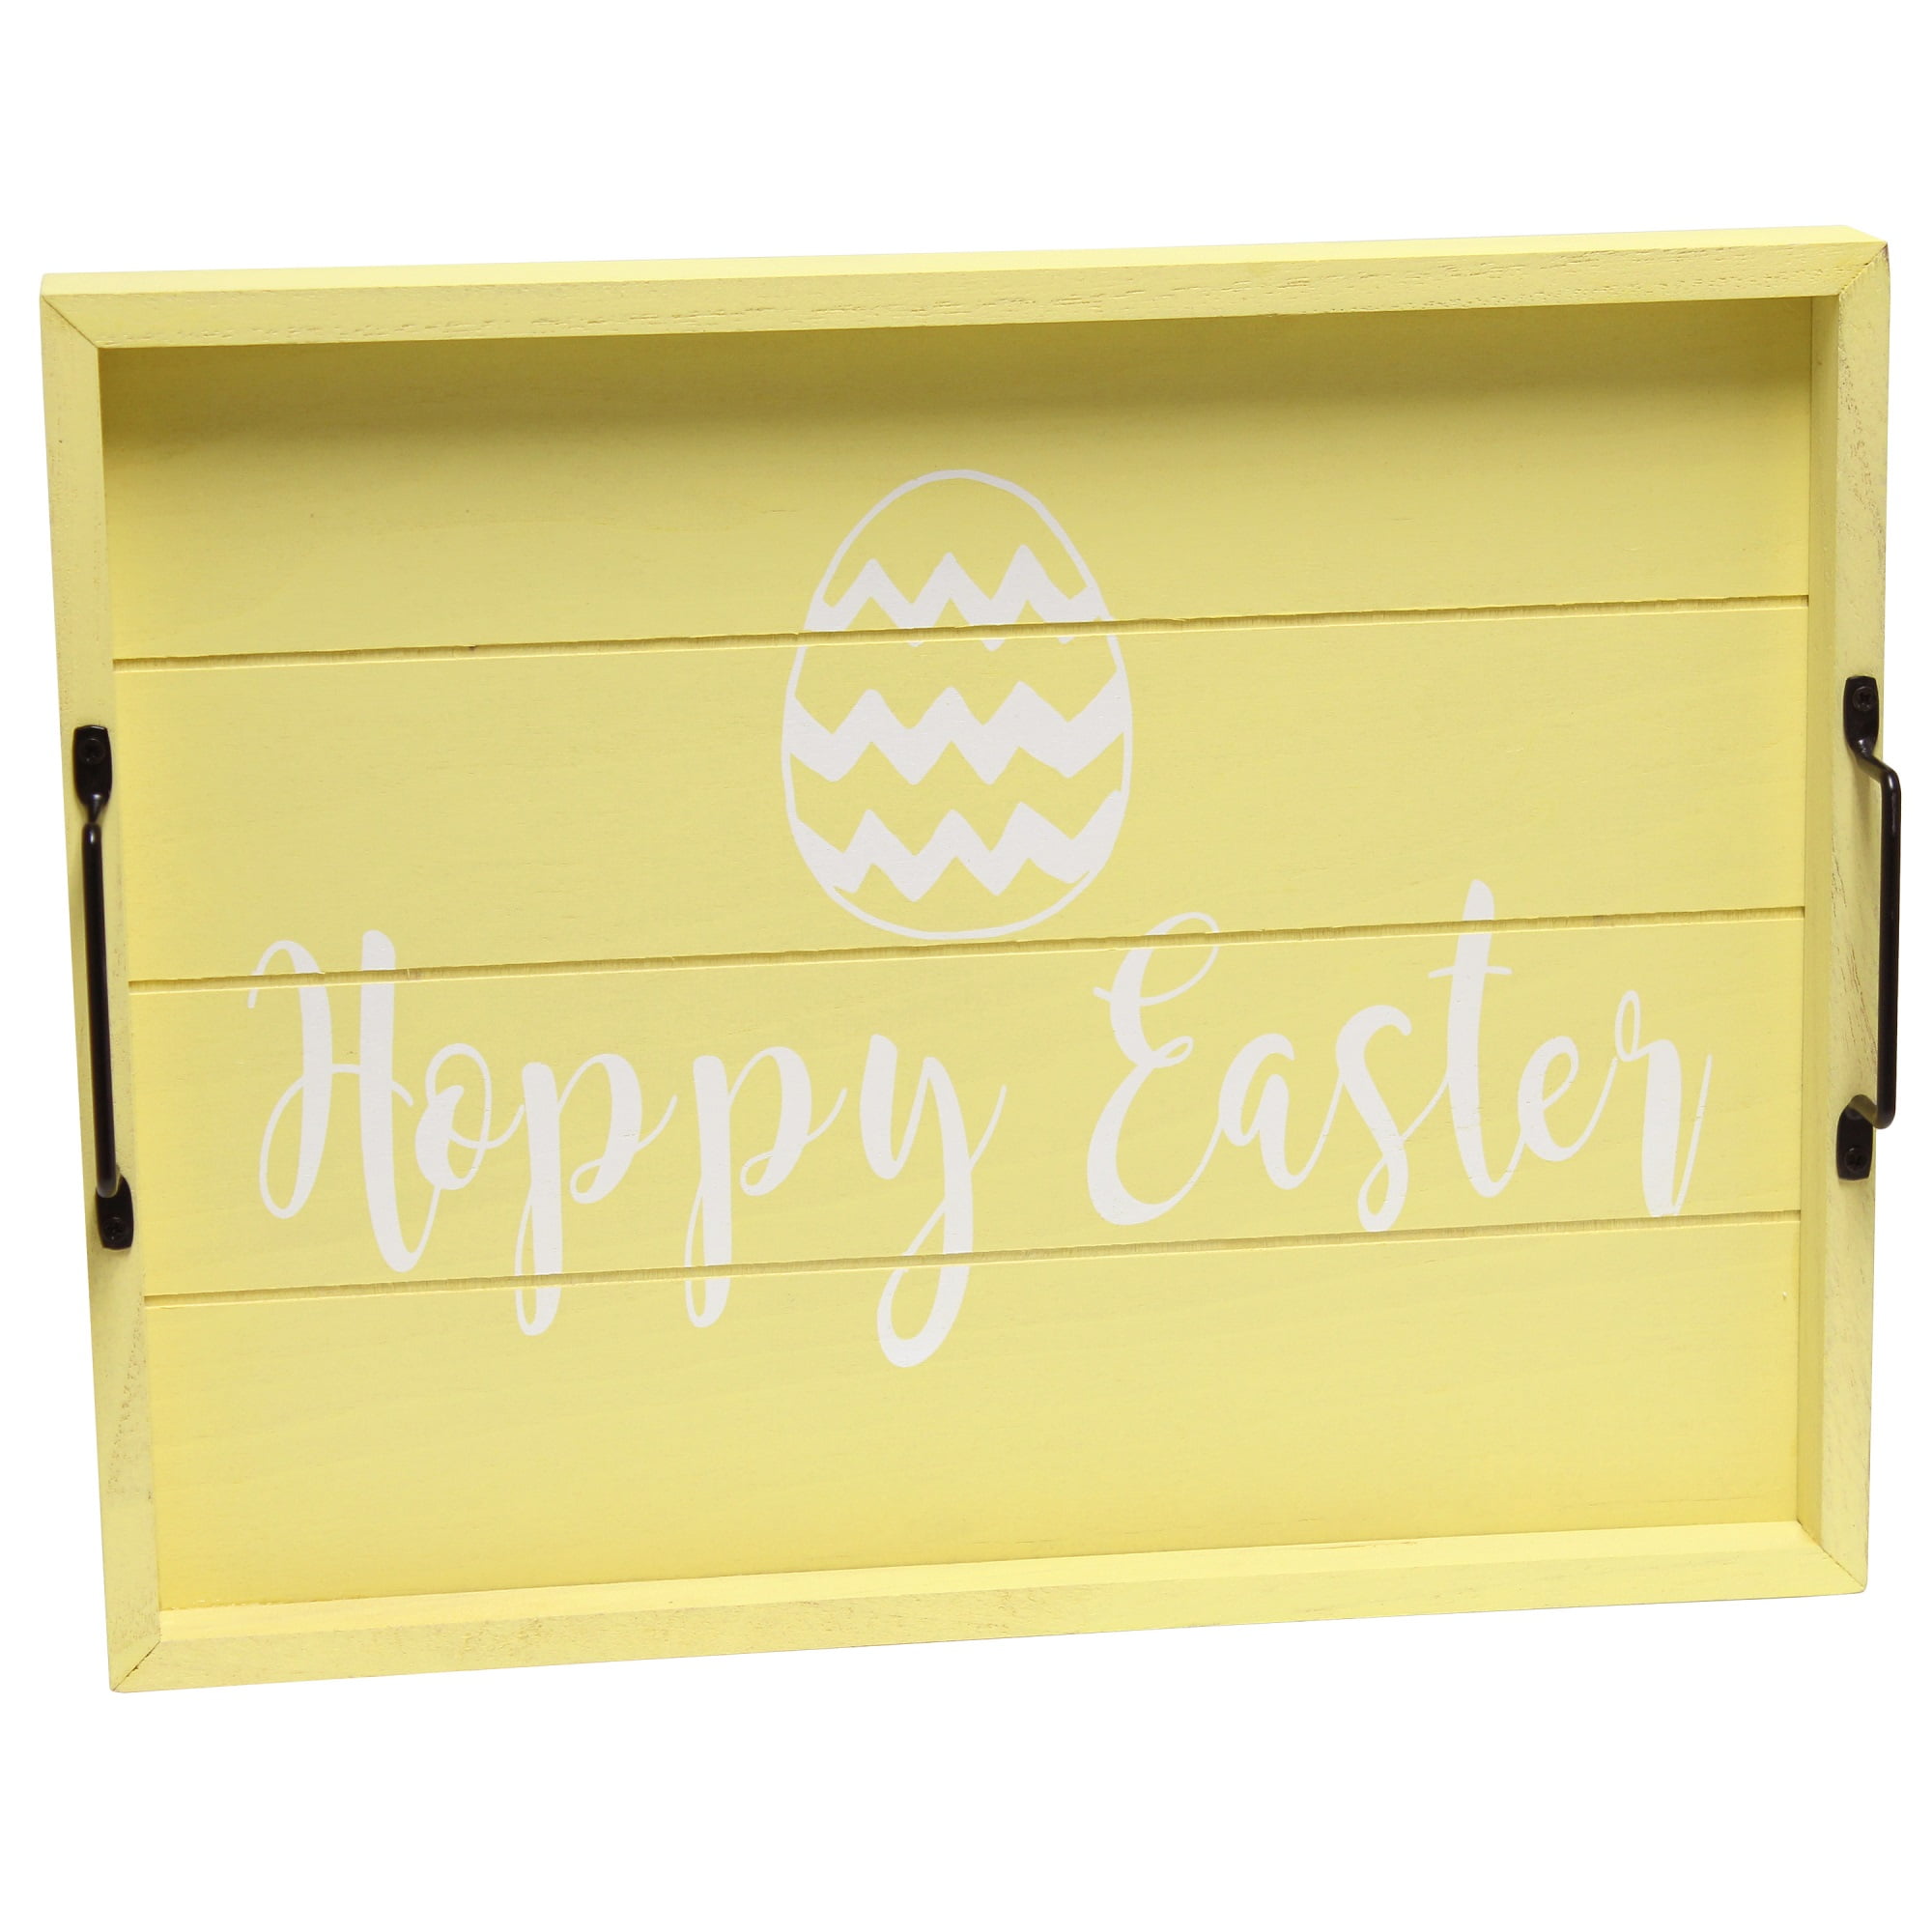 Elegant Designs Decorative Wood Serving Tray w/ Handles, 15.50" x 12", "Hoppy Easter"